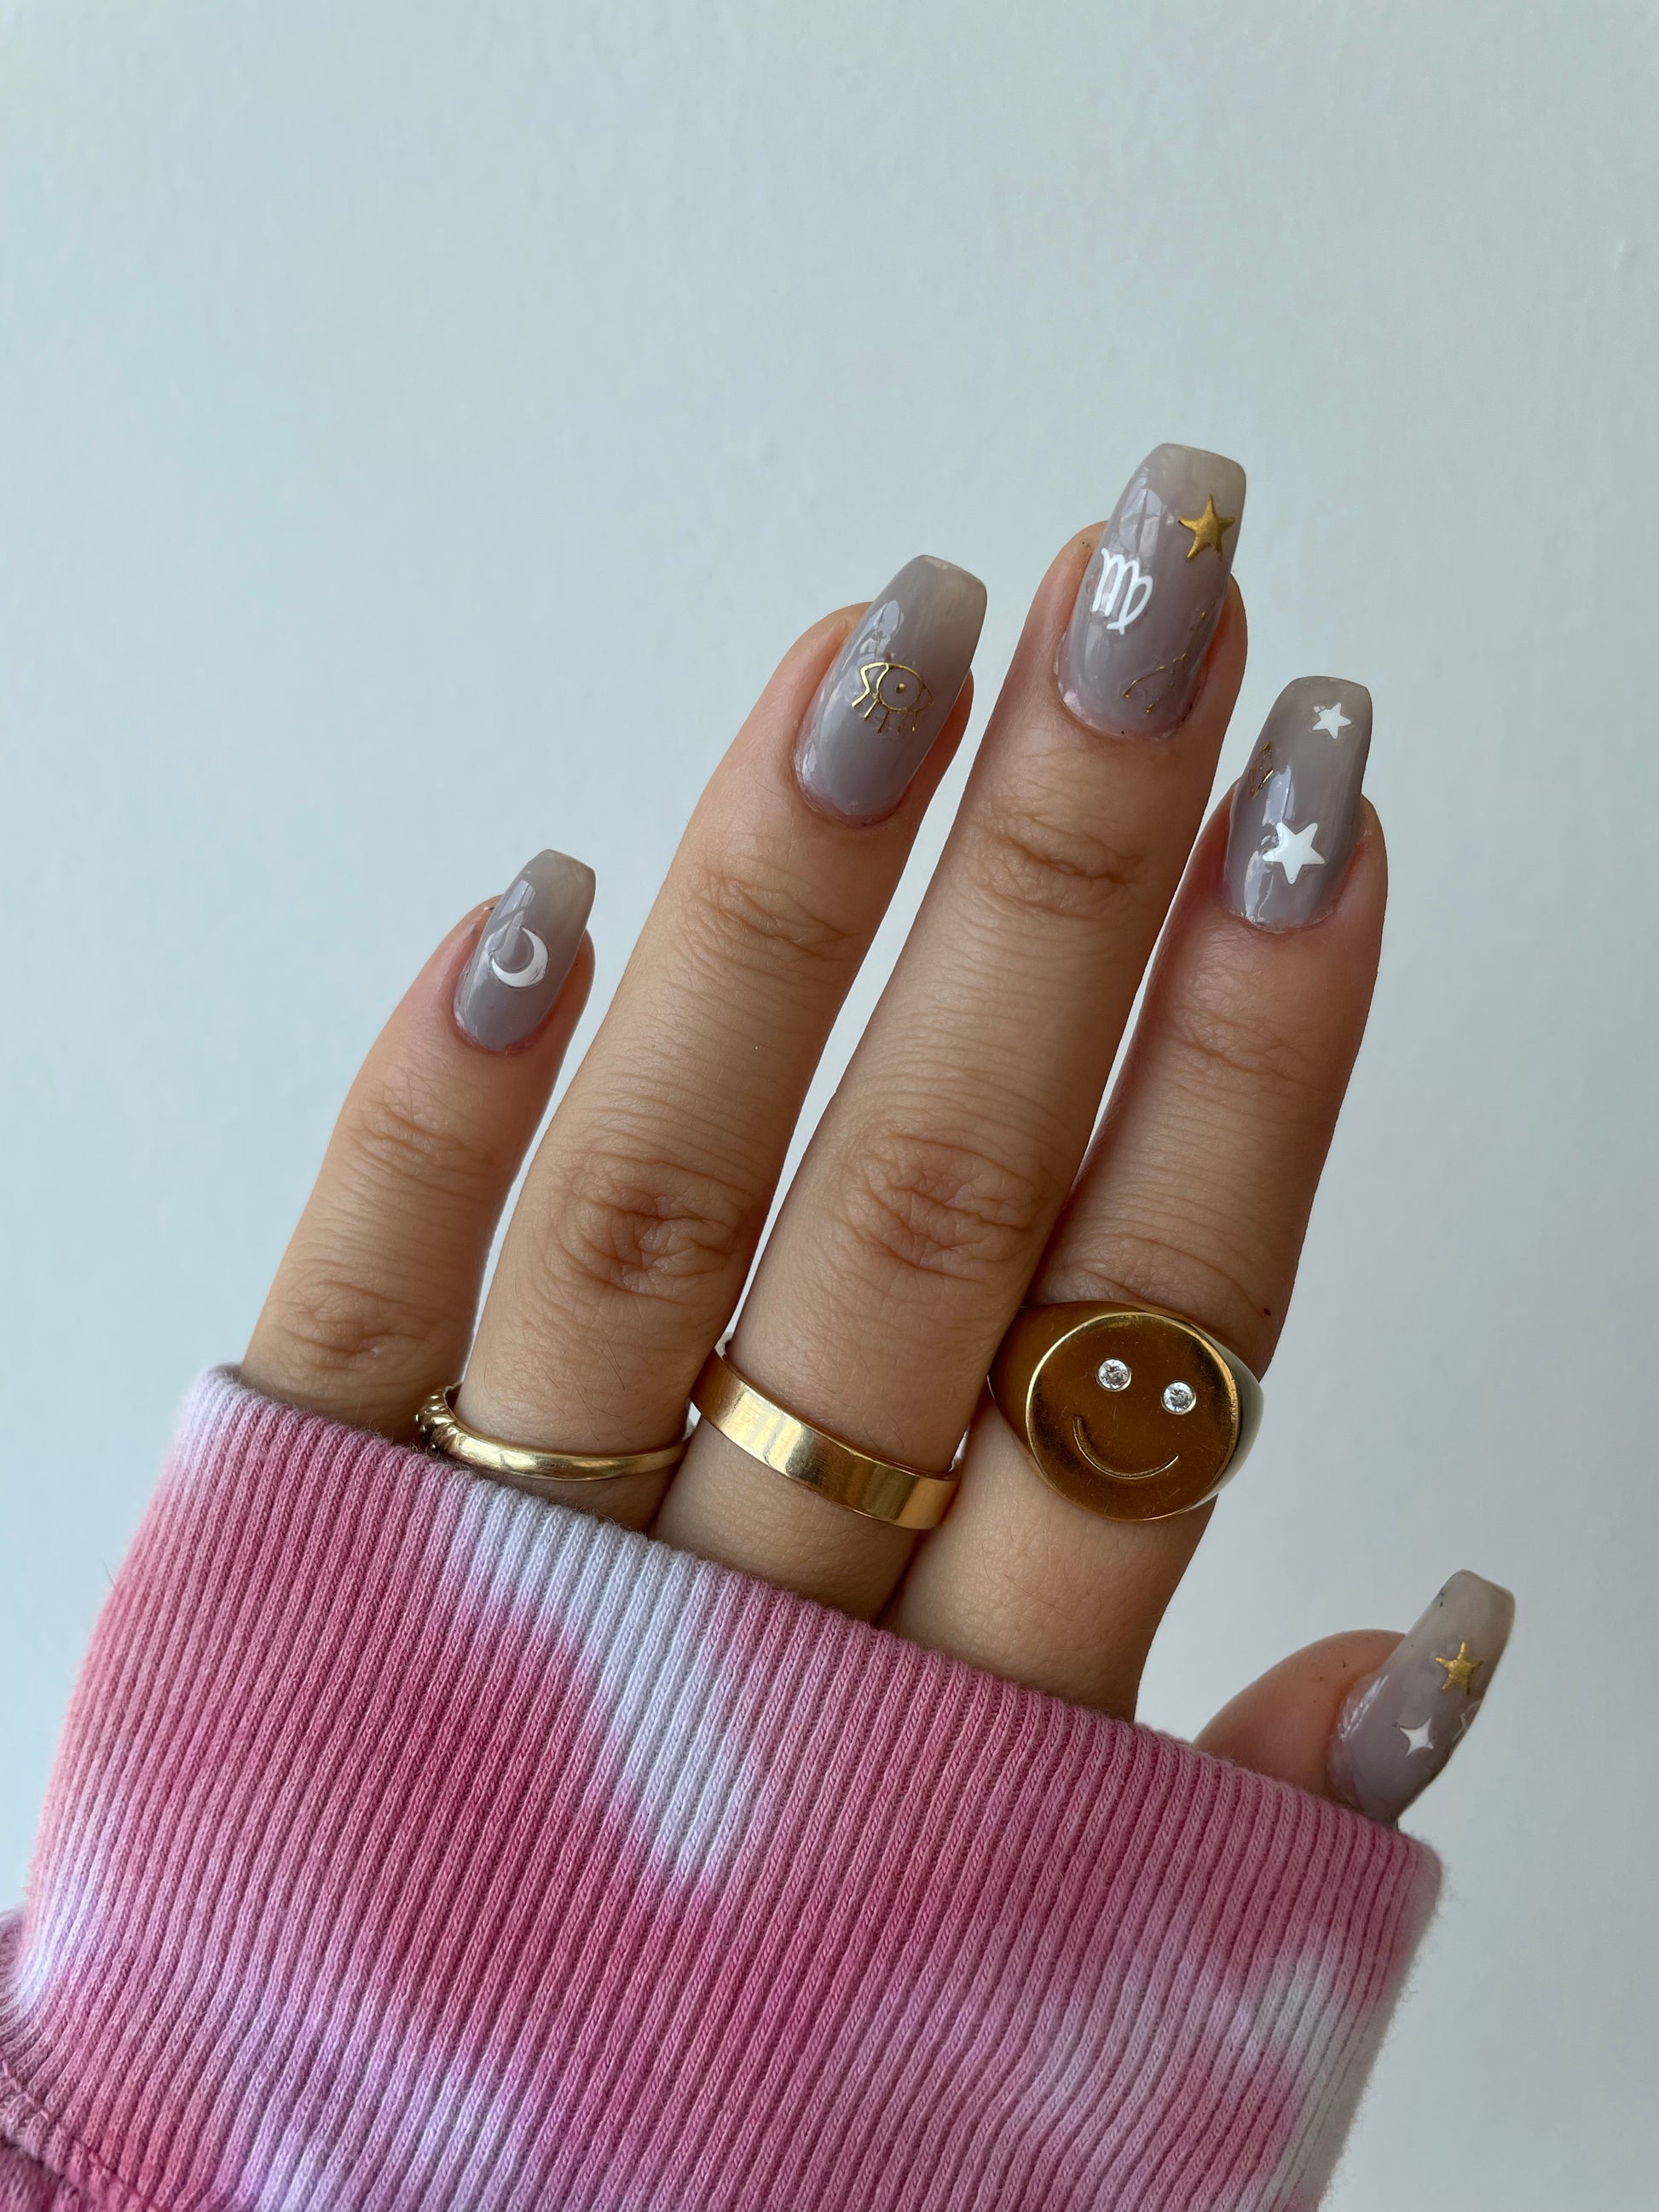 Zodiac nail art stickers on grey nails